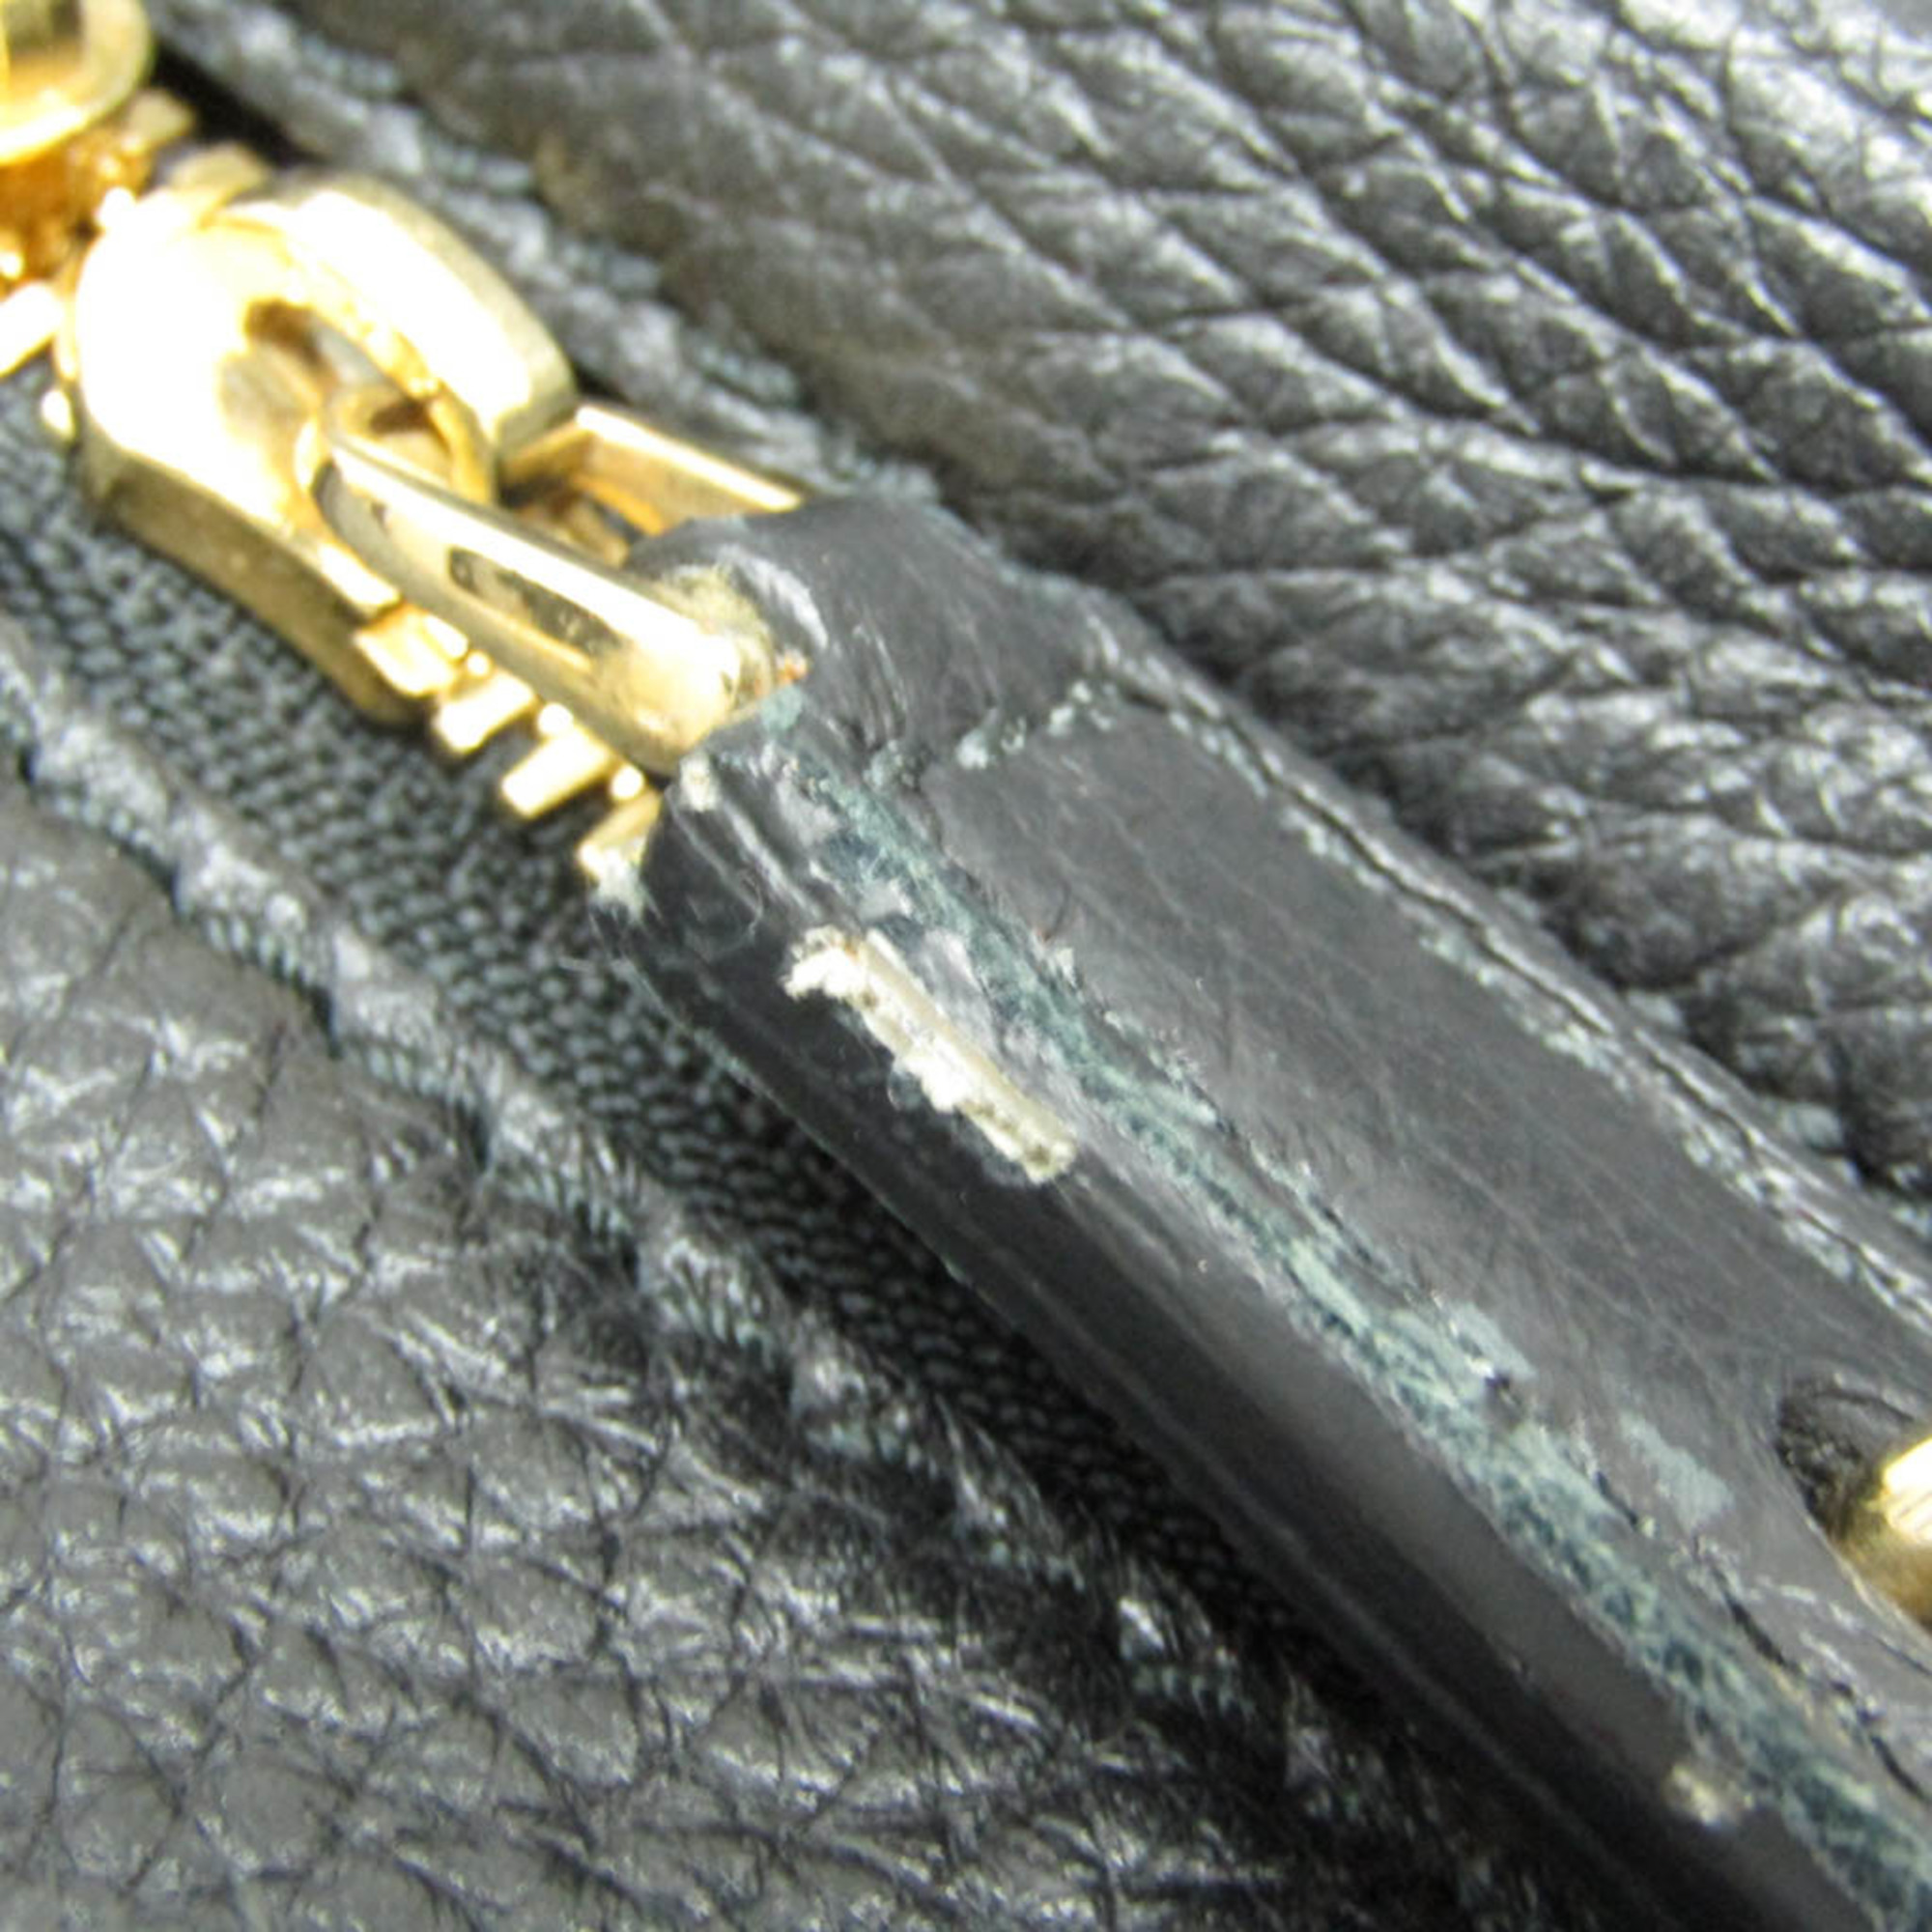 Dolce & Gabbana Women's Leather Tote Bag Black